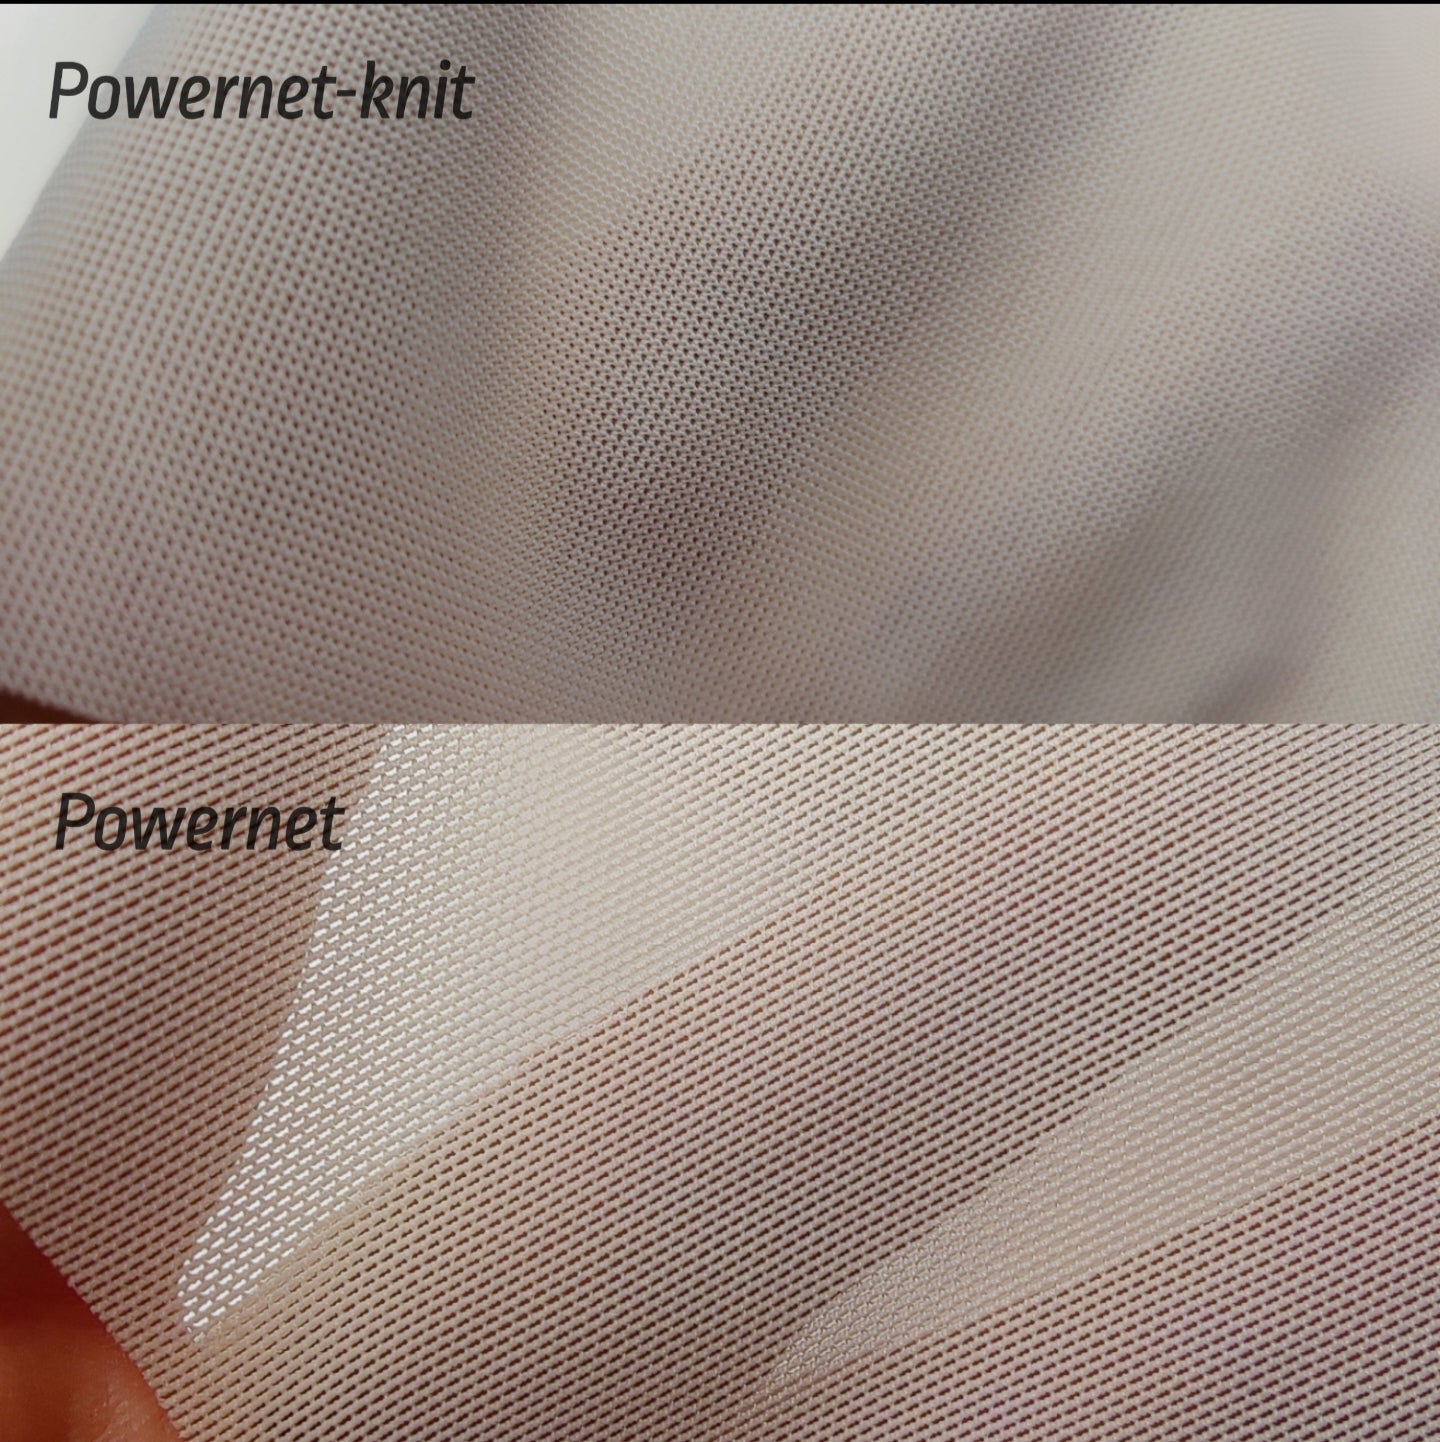 Powernet Knit peppercorn IDpwx8